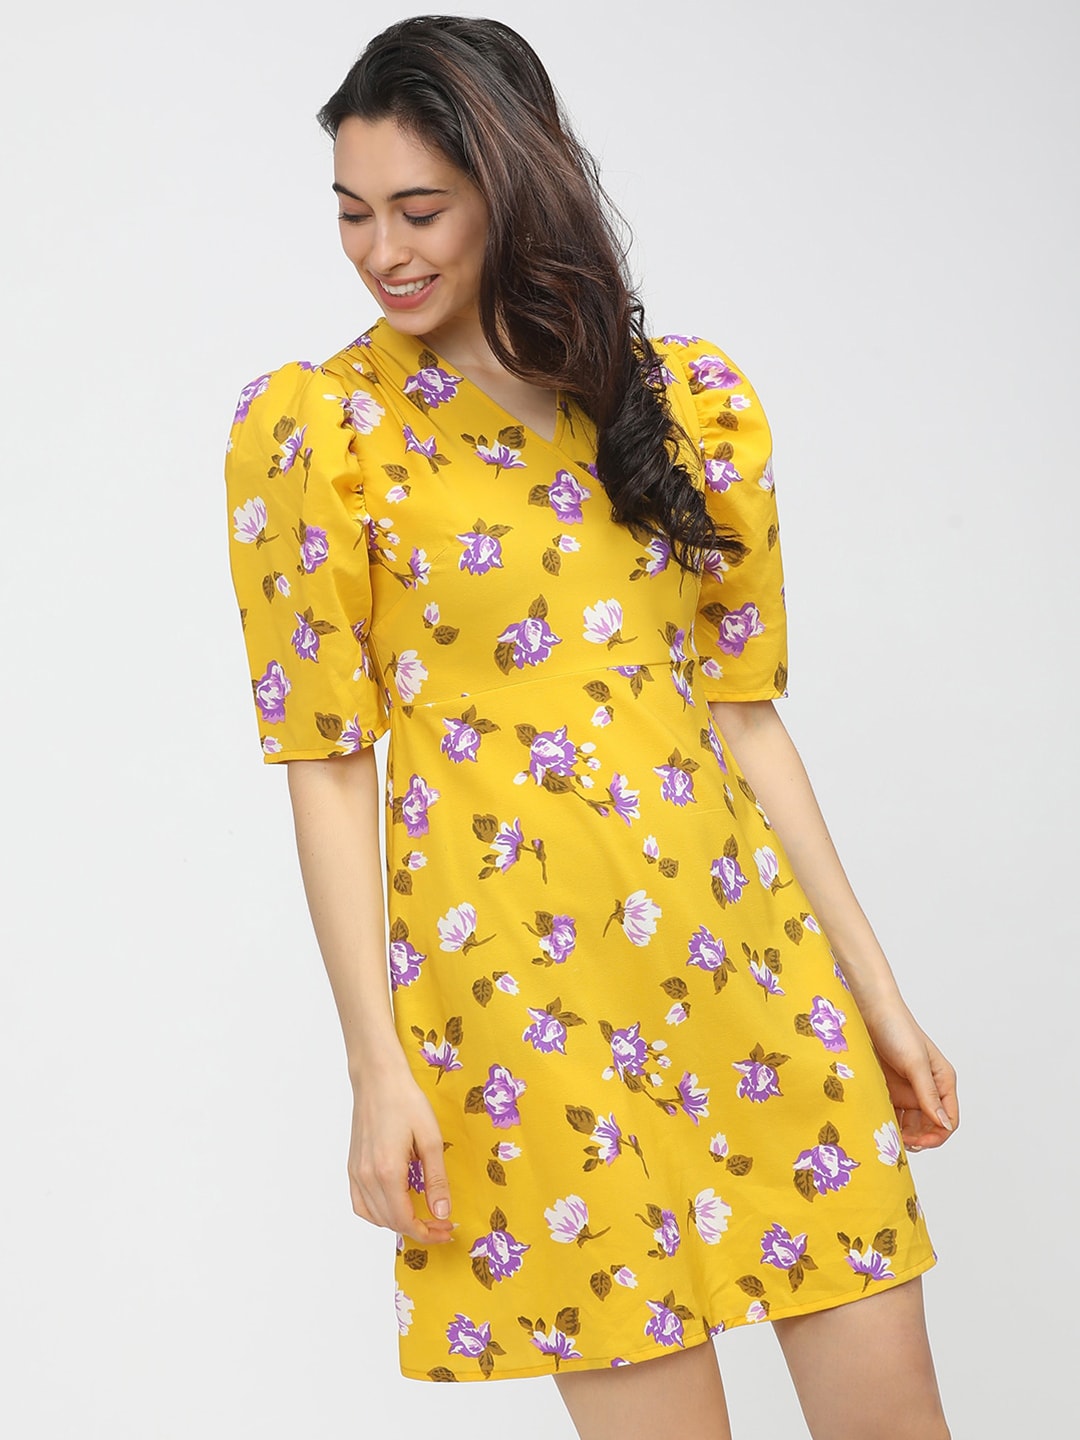 Tokyo Talkies Yellow & Purple Floral Dress Price in India